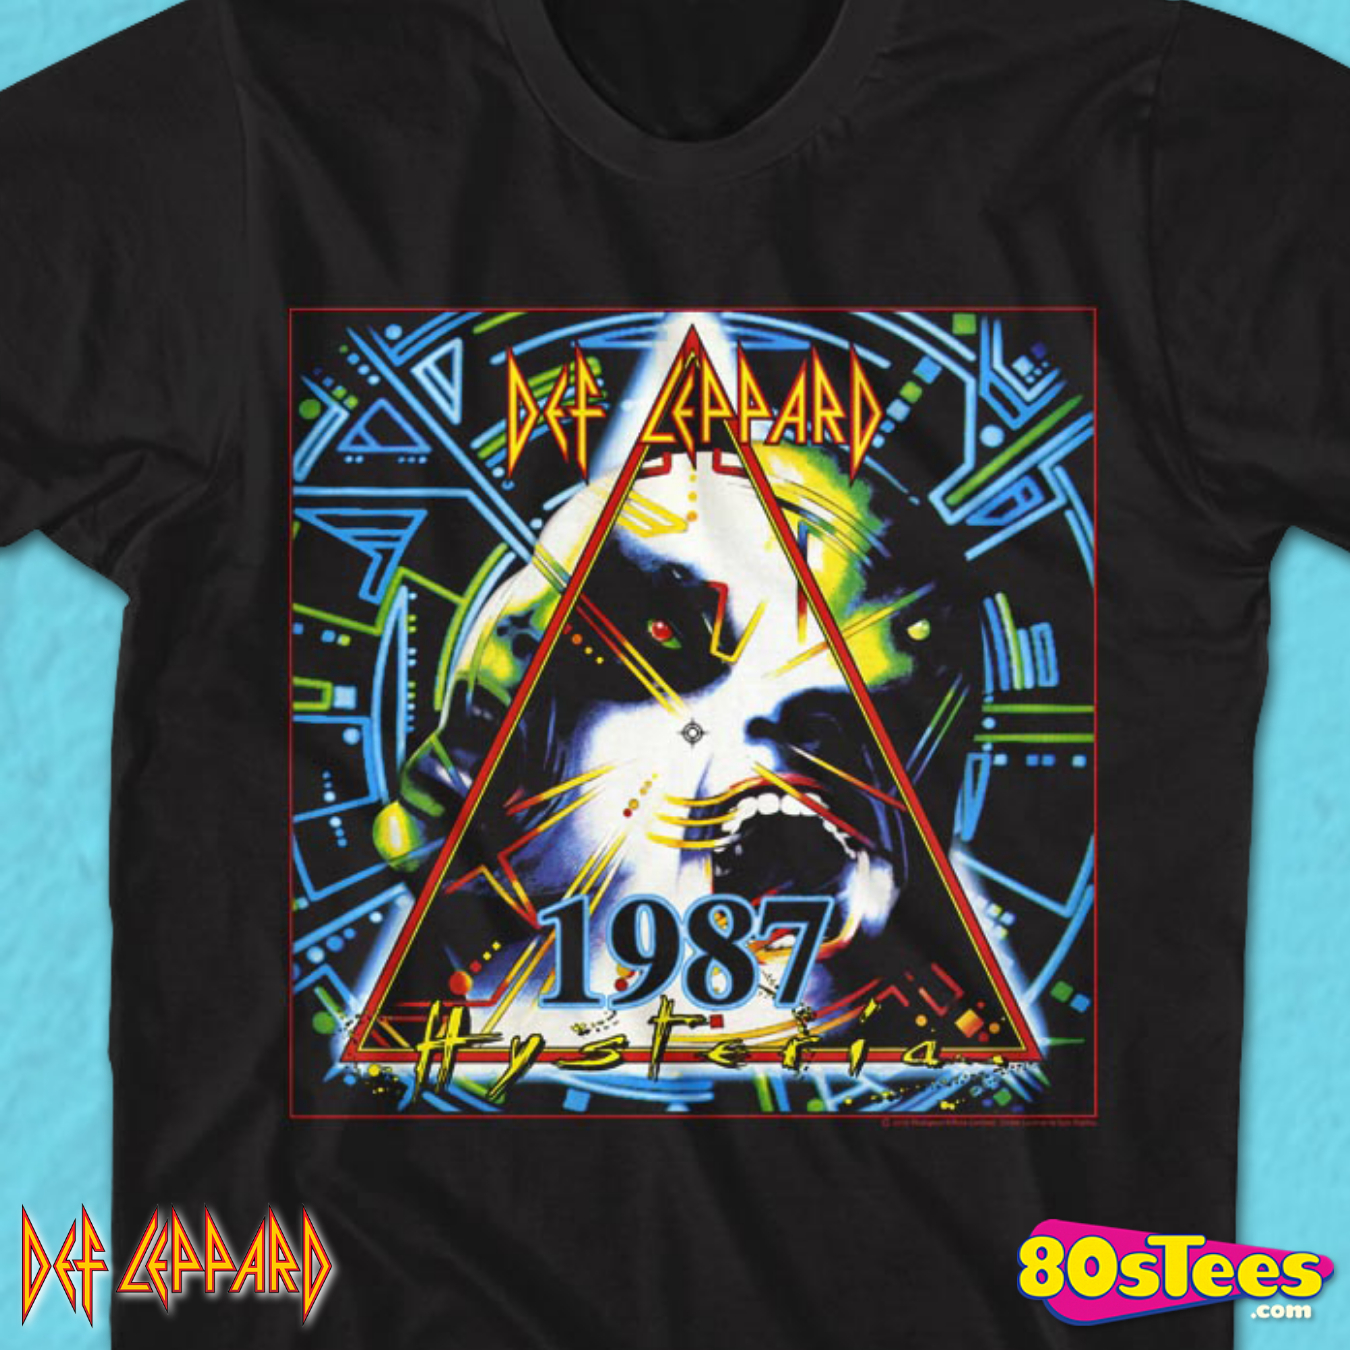 Def Leppard Hysteria Tour 1987 Men/'s T Shirt Group Photo Rock Band Music Merch